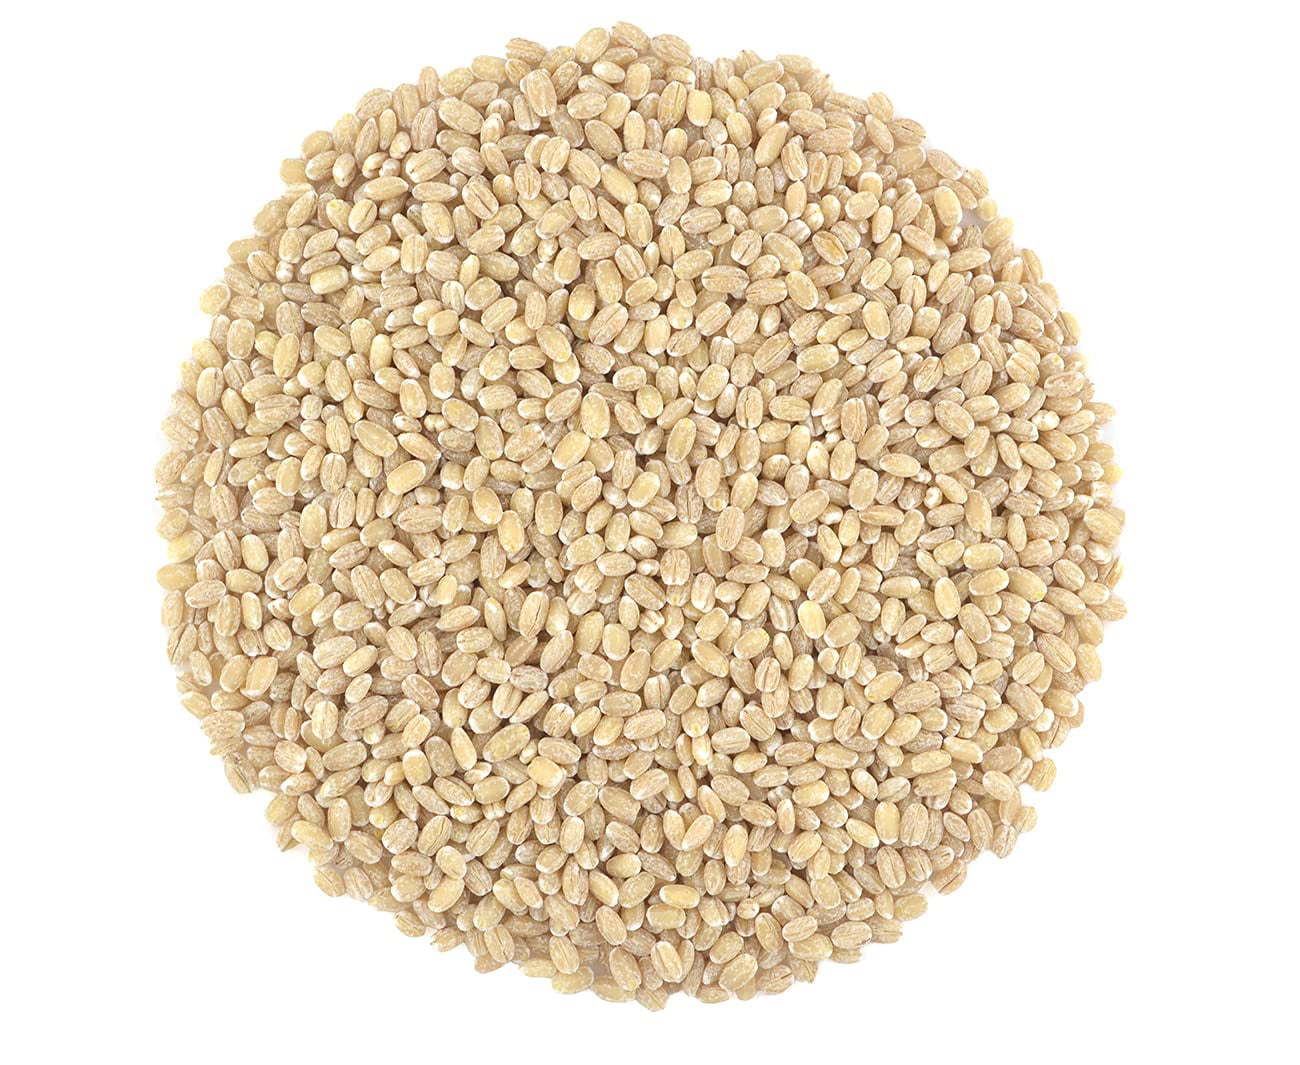 Usa Grown Organic Hulled Barley Grain Protein Fiberraw Non Gmo